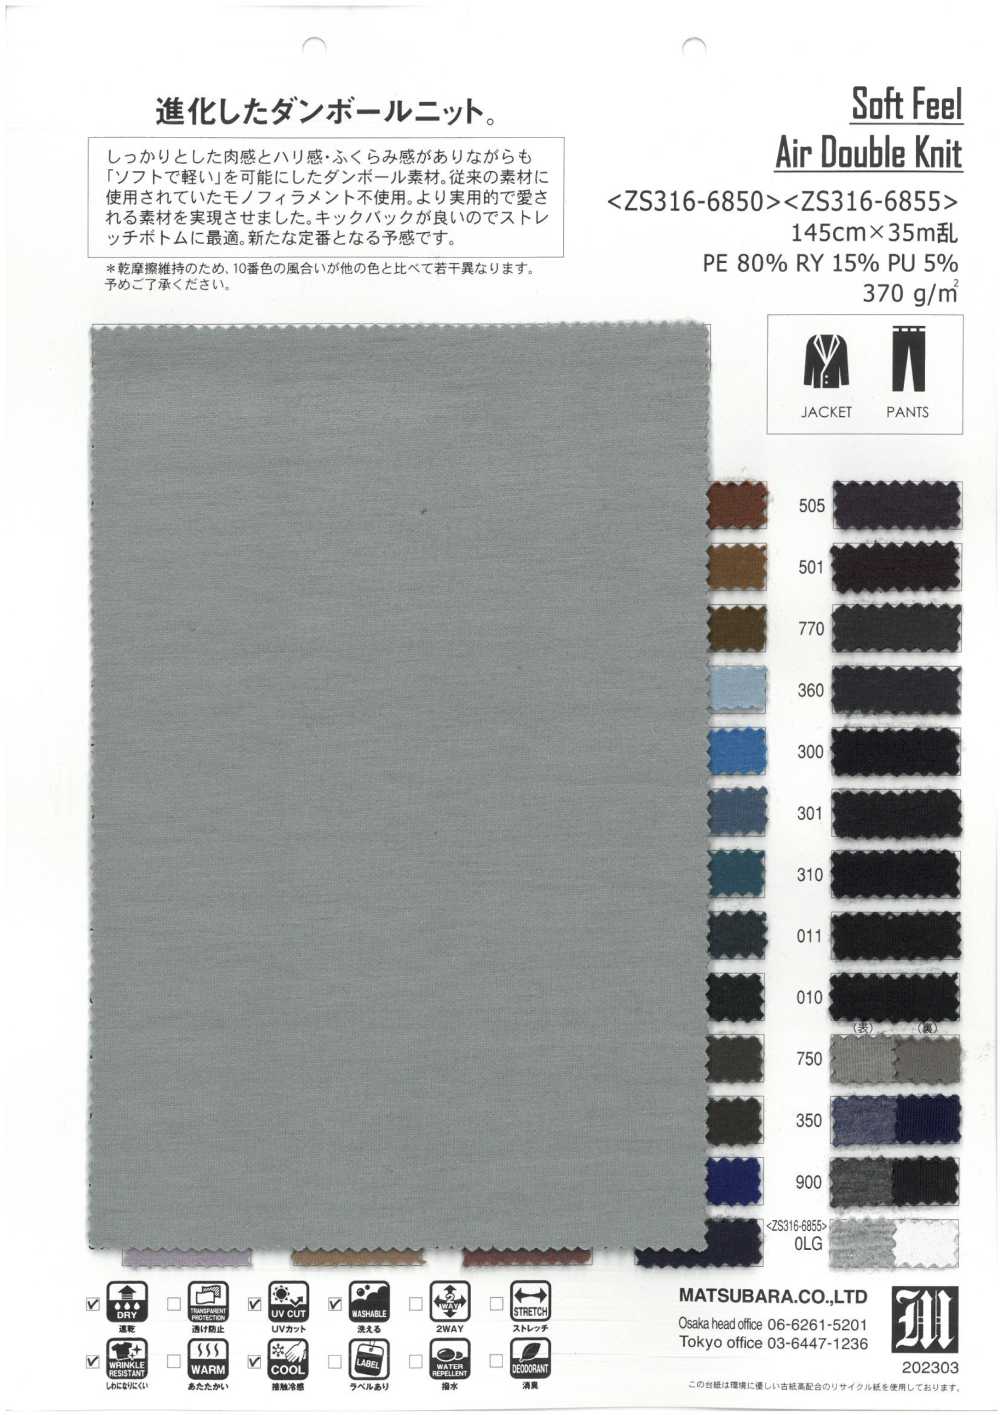 ZS316-6850 Soft Feel Air Double Knit[Textile / Fabric] Matsubara